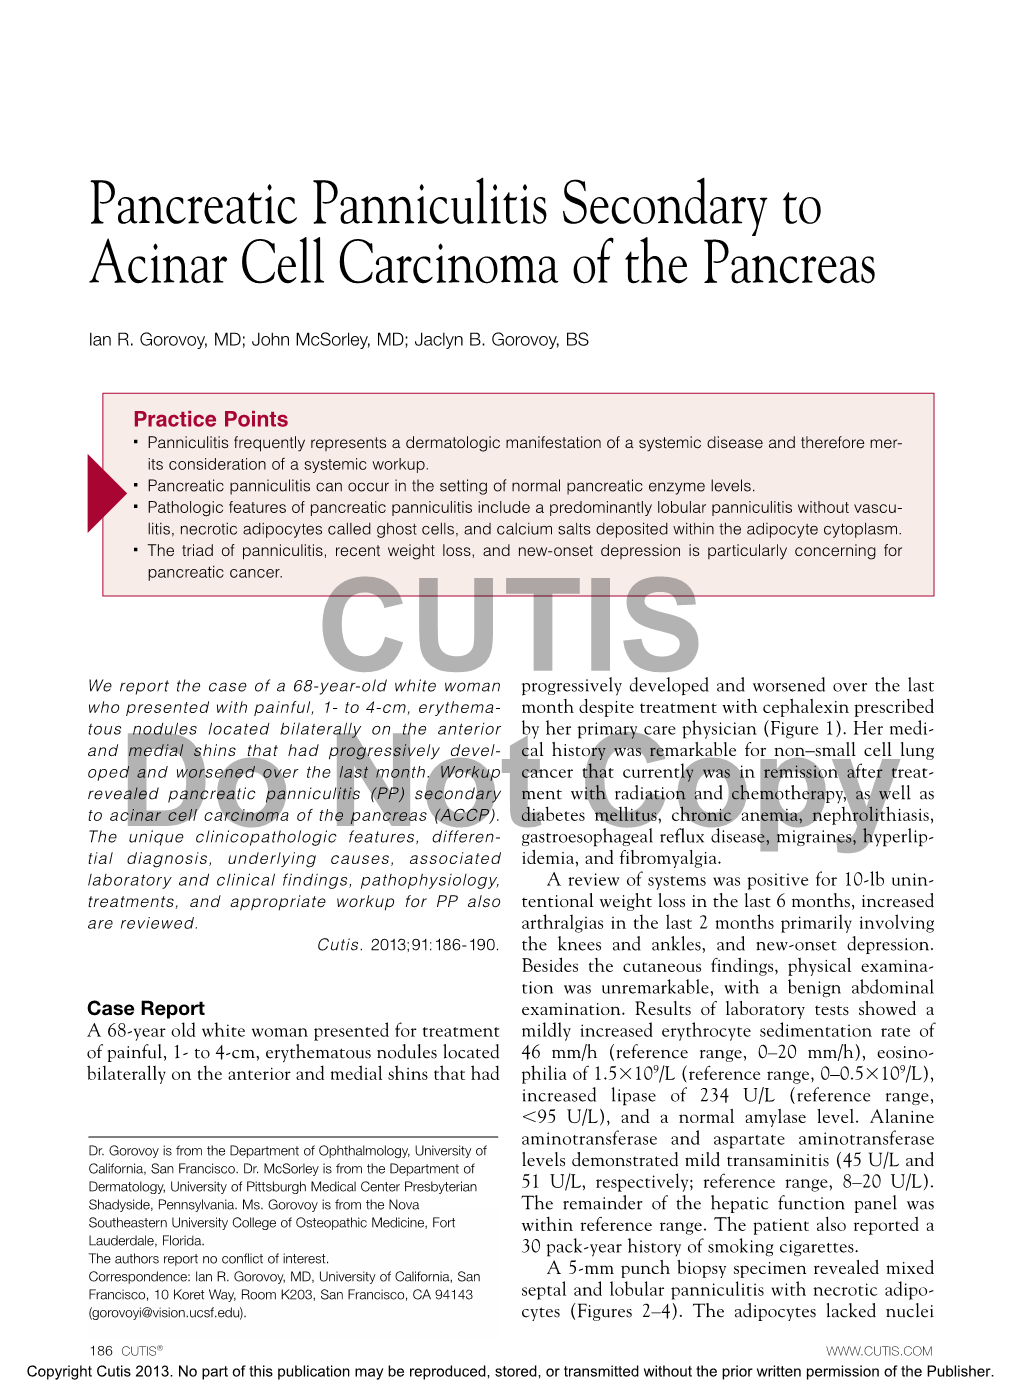 Pancreatic Panniculitis Secondary to Acinar Cell Carcinoma of the Pancreas